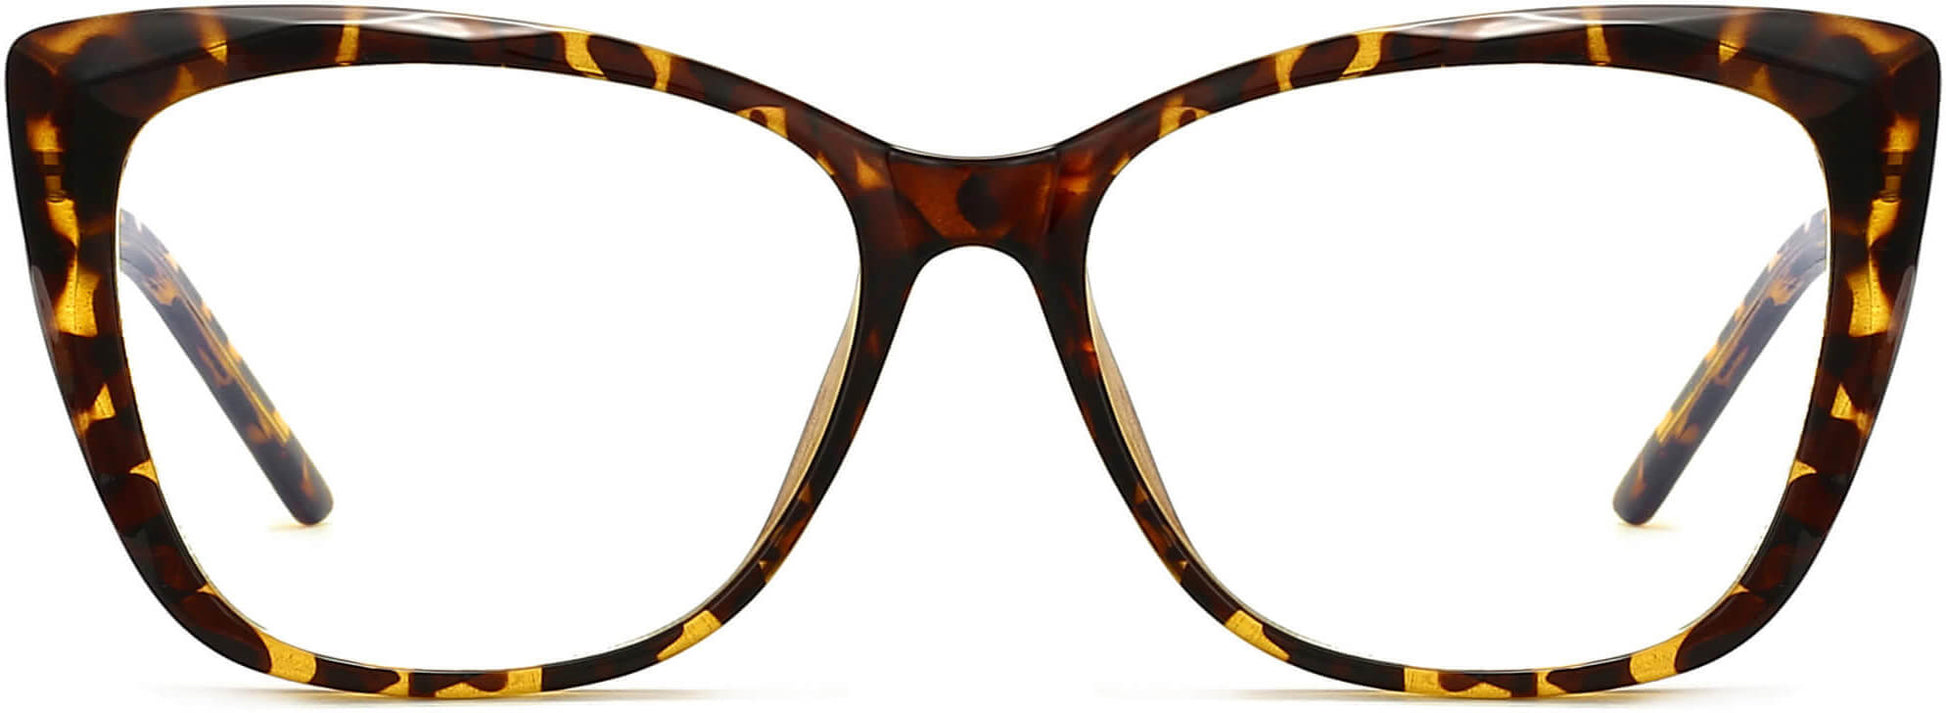 Bonnie Cateye Tortoise Eyeglasses from ANRRI, front view